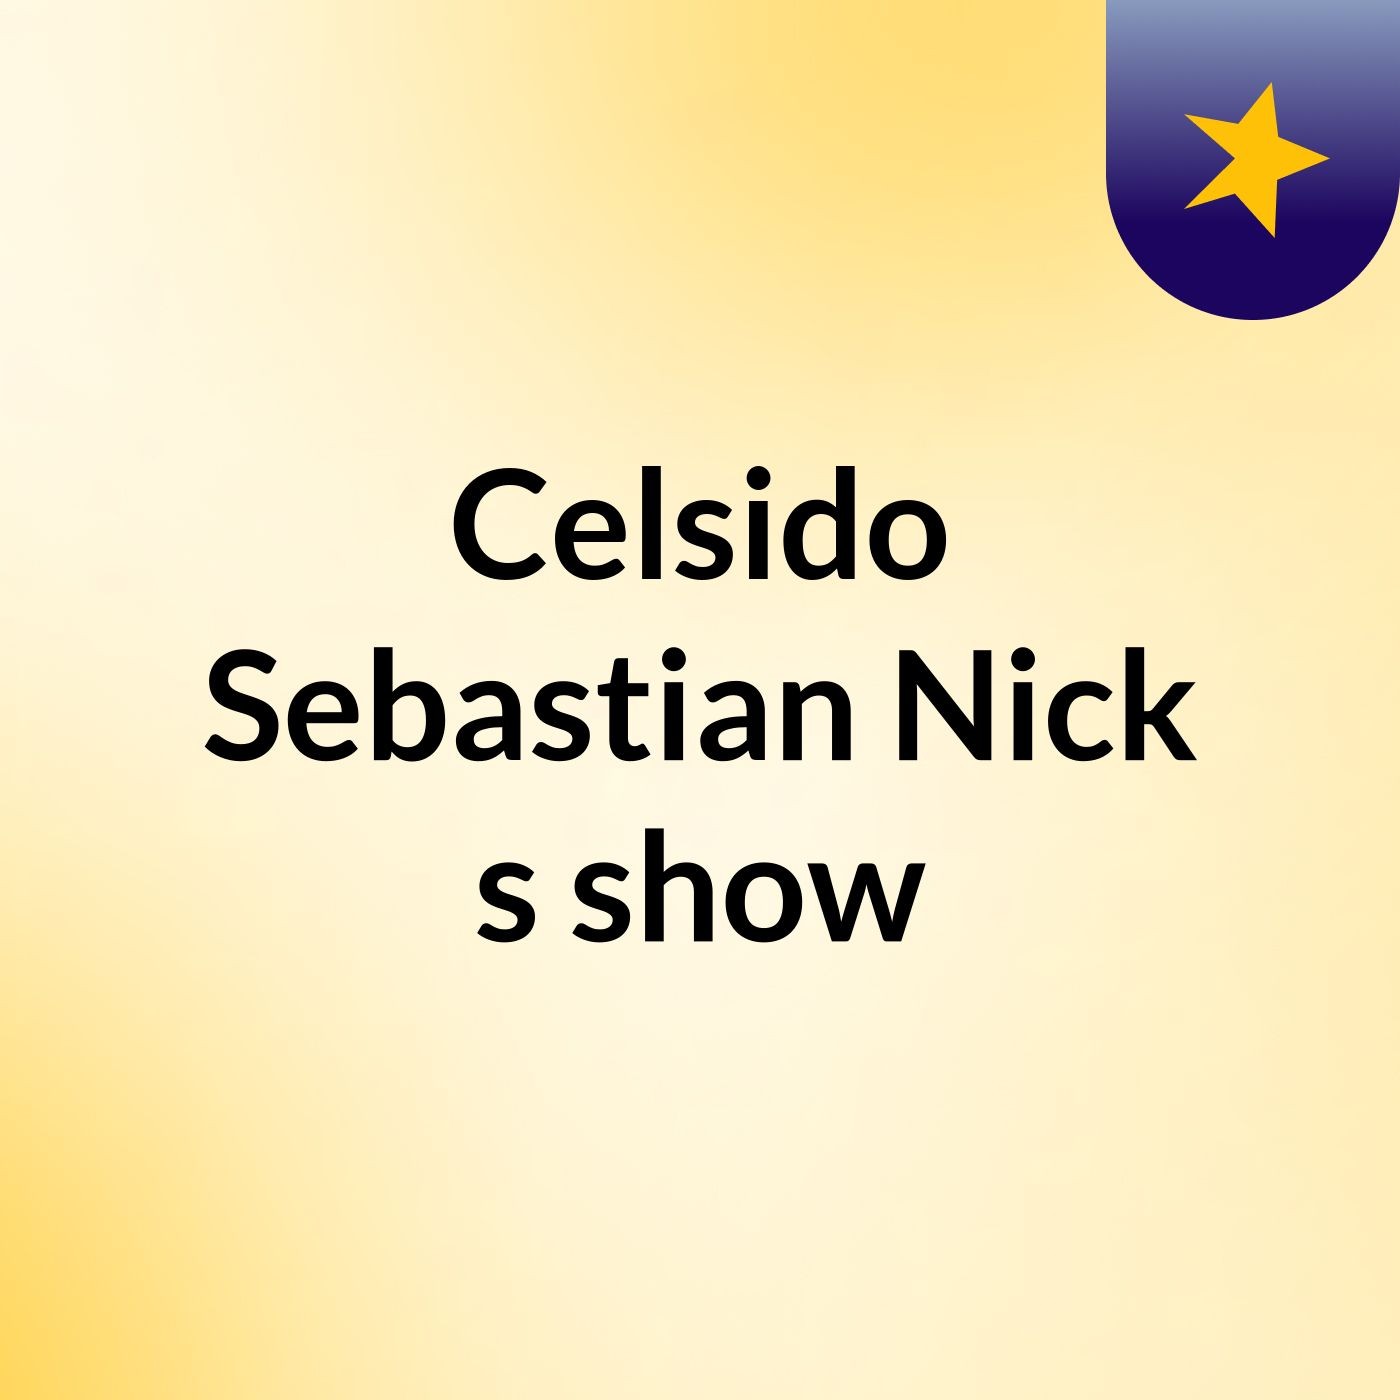 Celsido Sebastian Nick's show